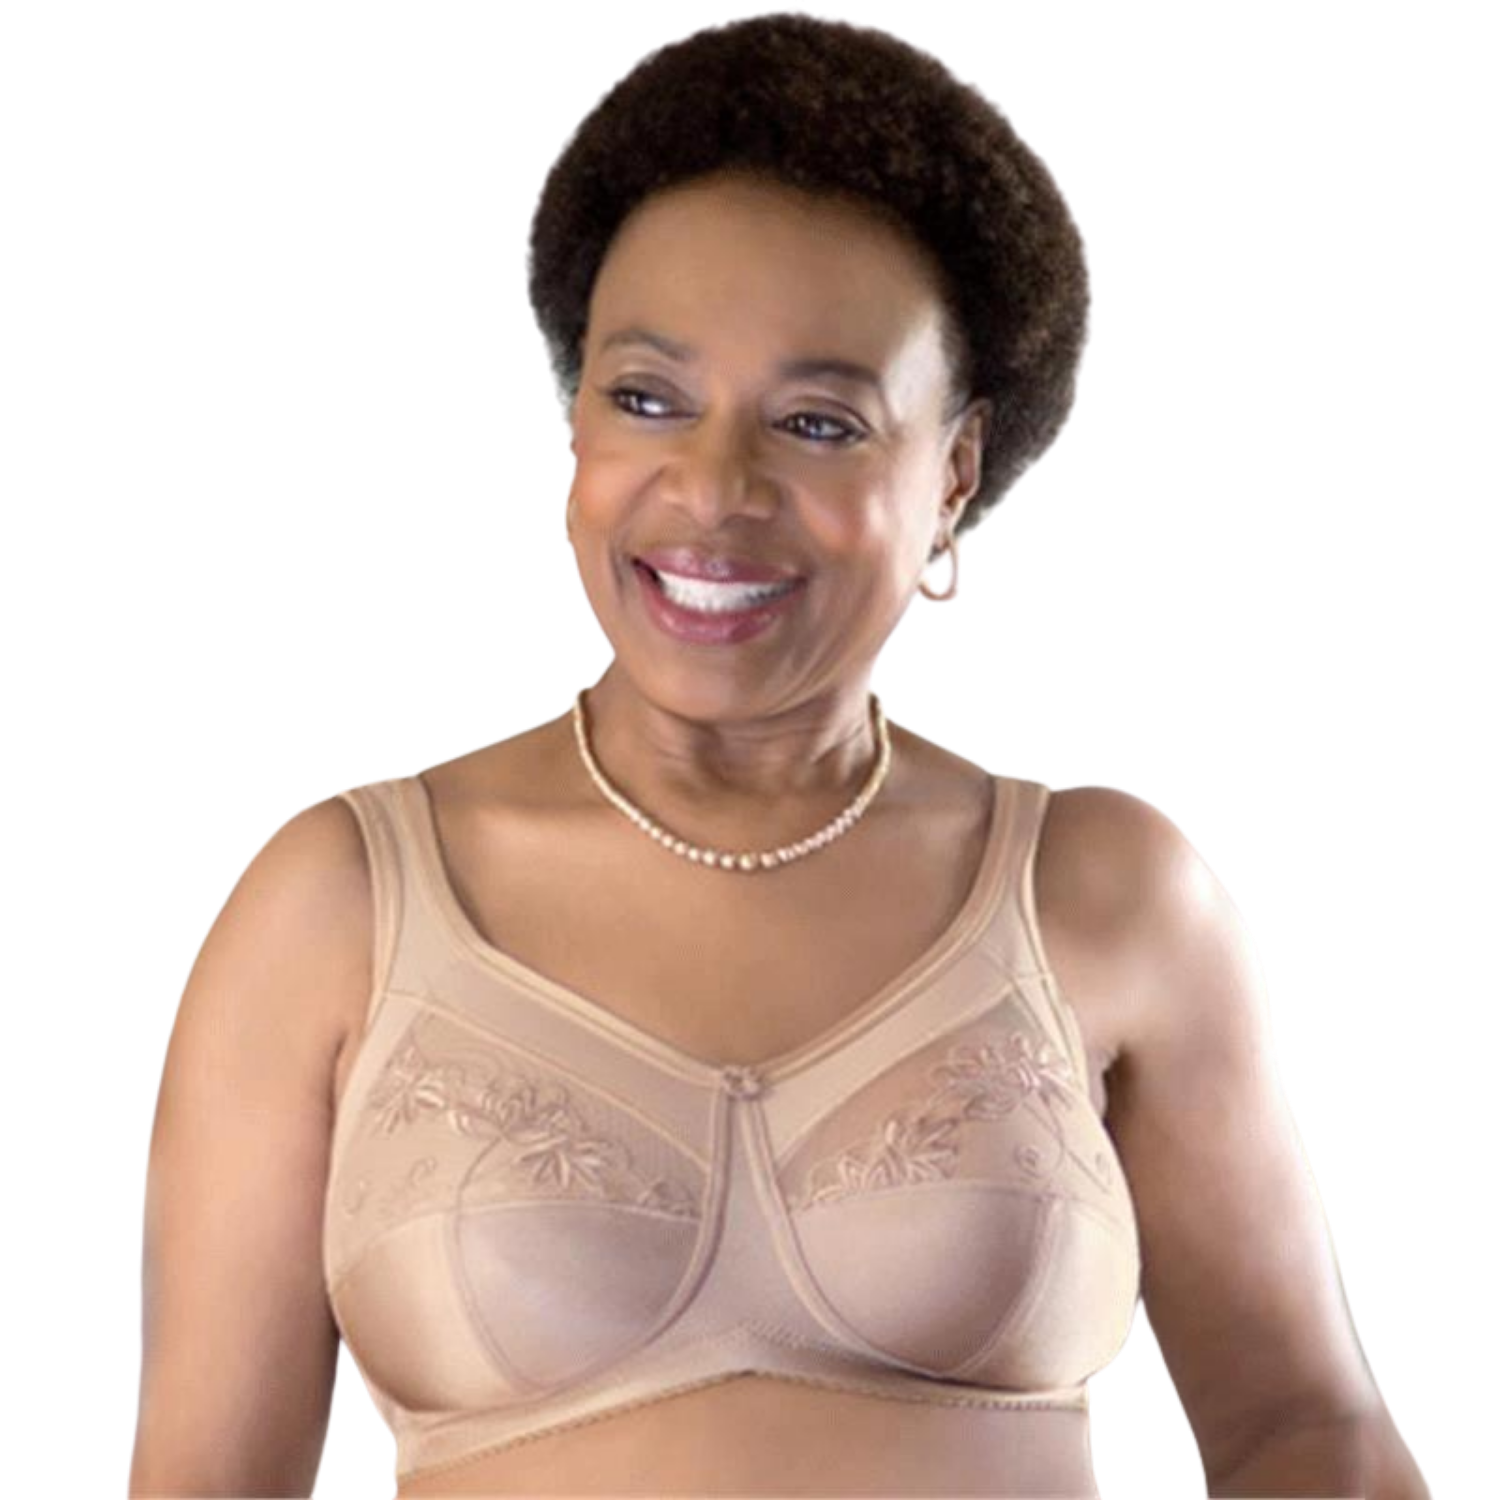 sports bras for women,dd breast size,34b breast,bridal panties